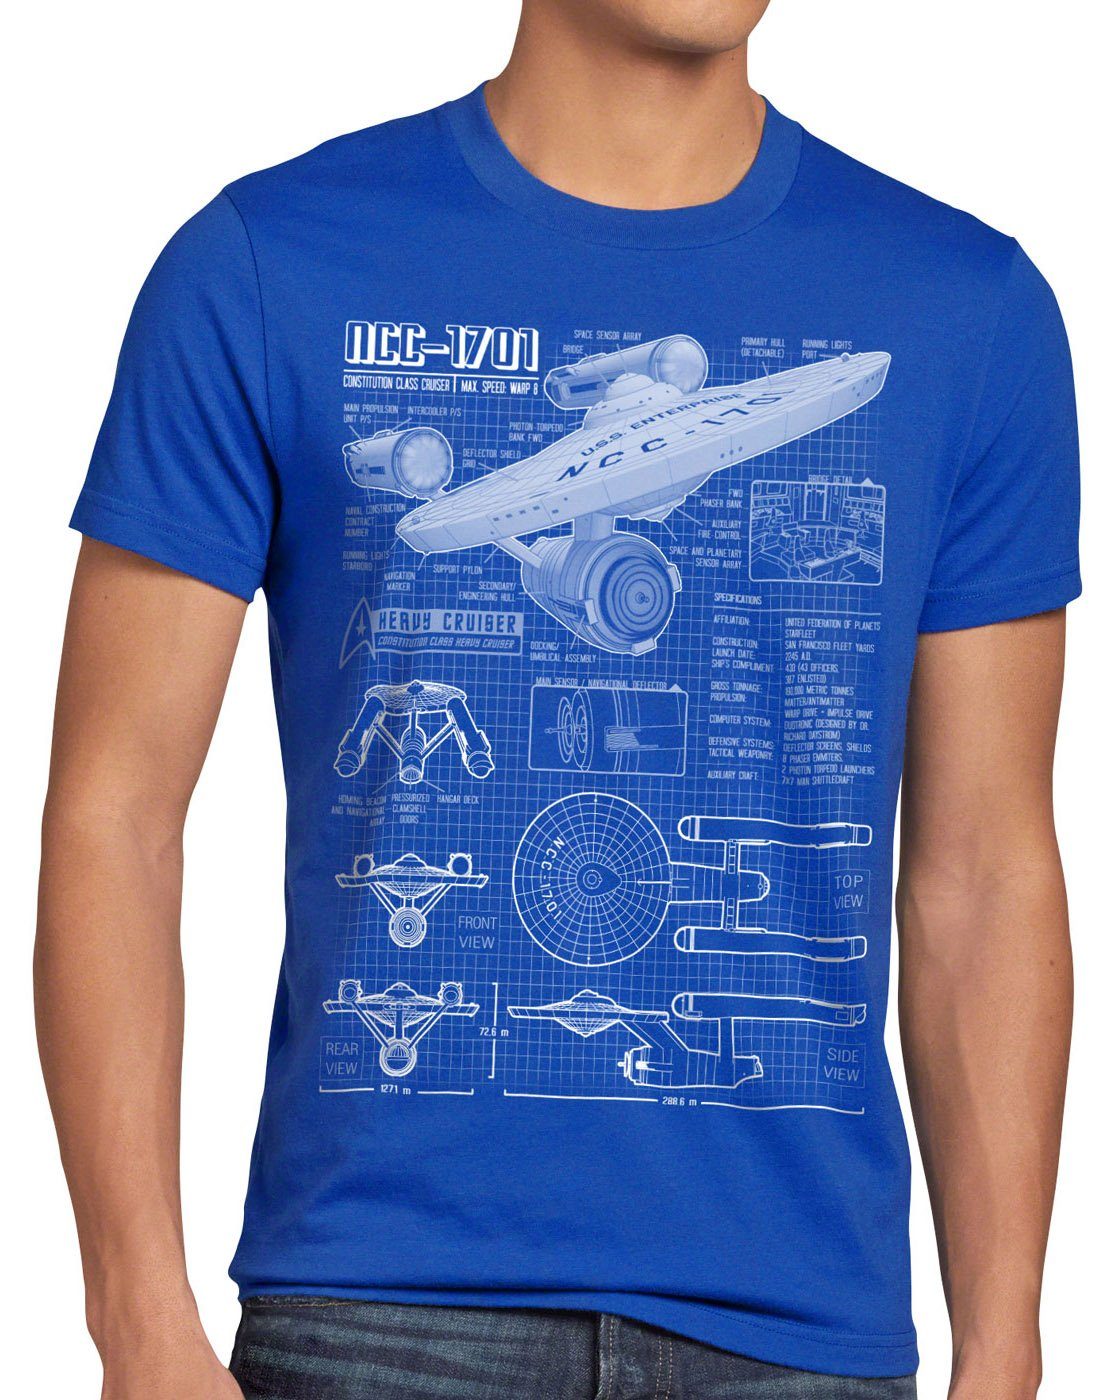 style3 Print-Shirt Herren T-Shirt NCC-1701 christopher pike trek trekkie star sternenflotte klingon blau